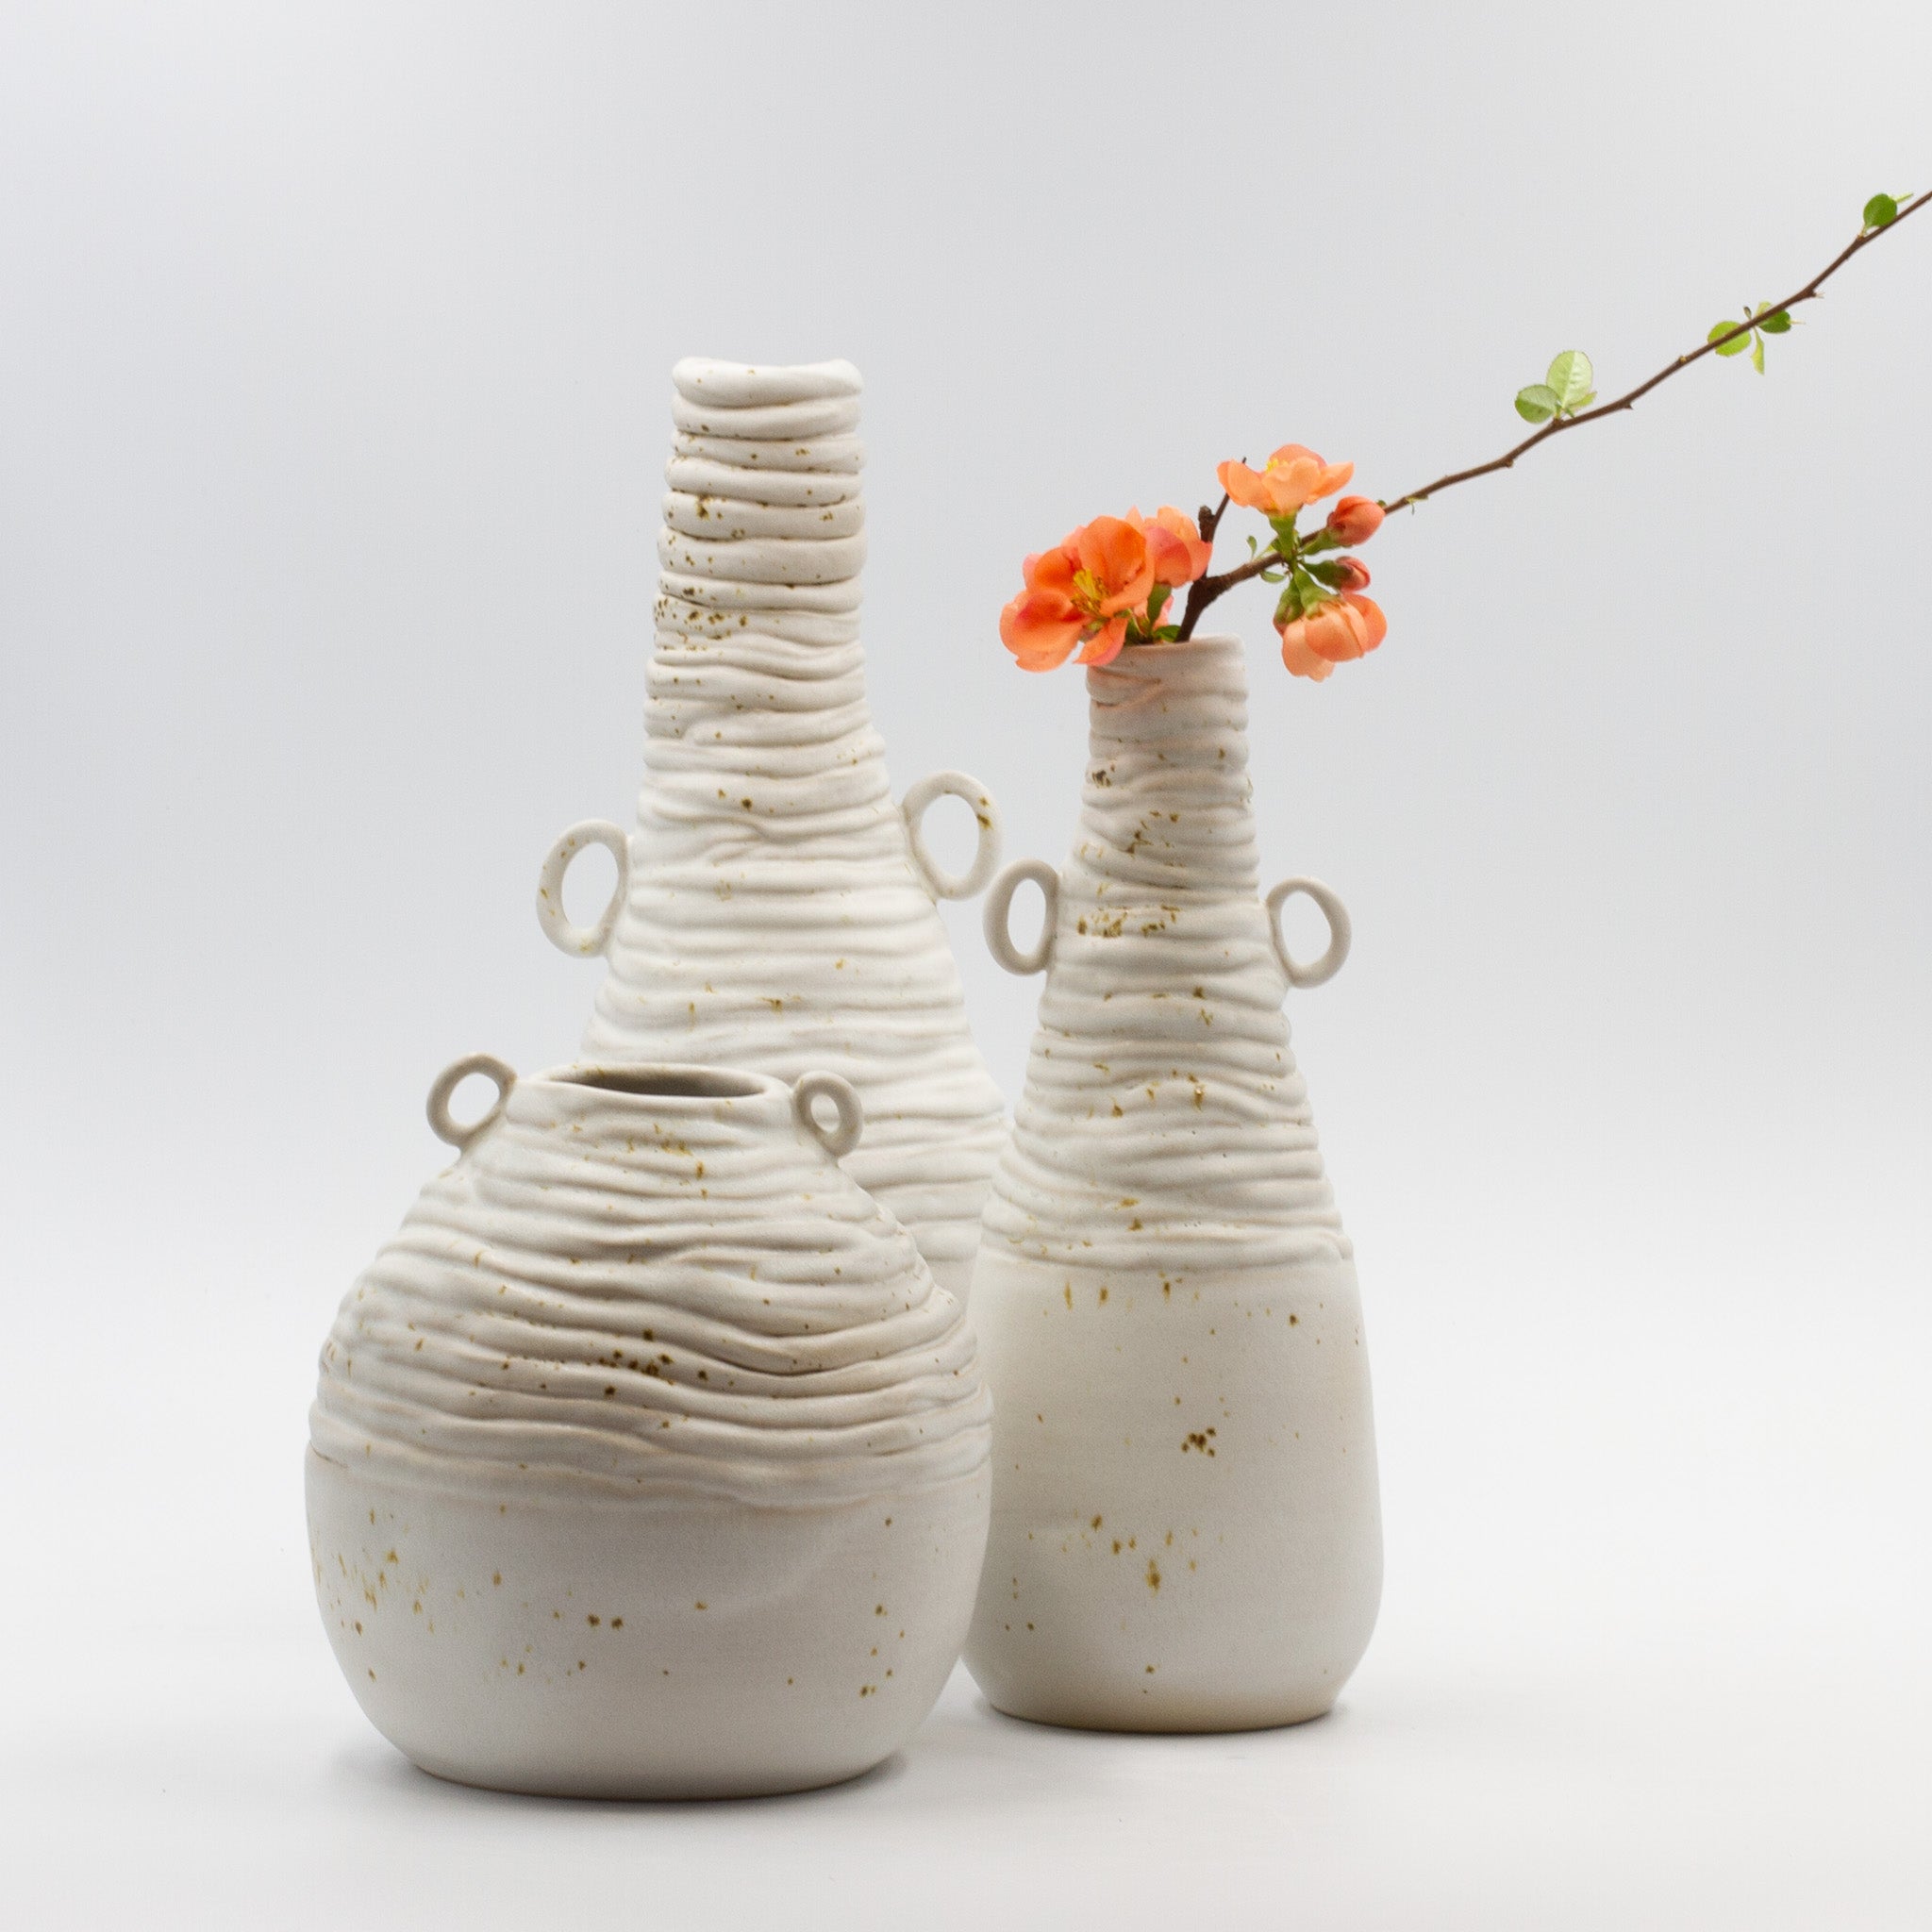 Handmade Cocoon vase